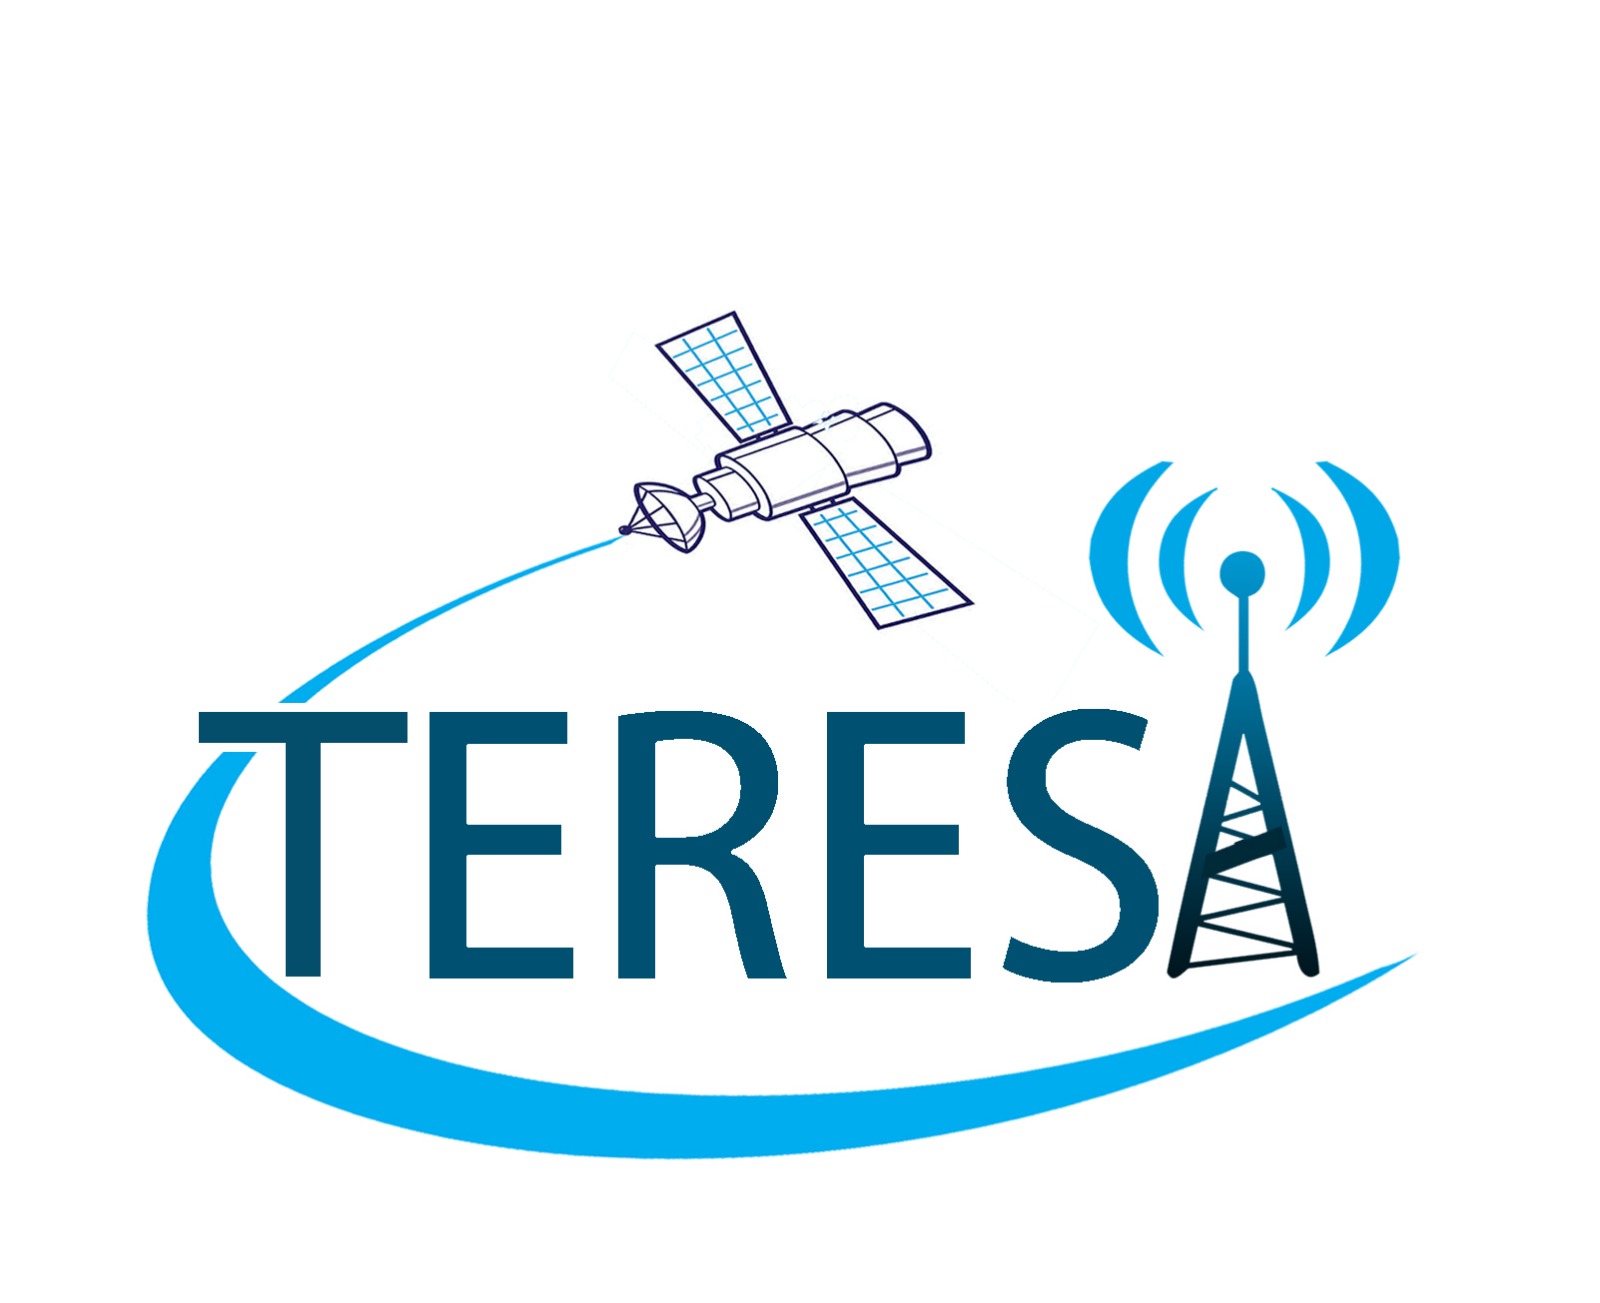 TERESA_logo